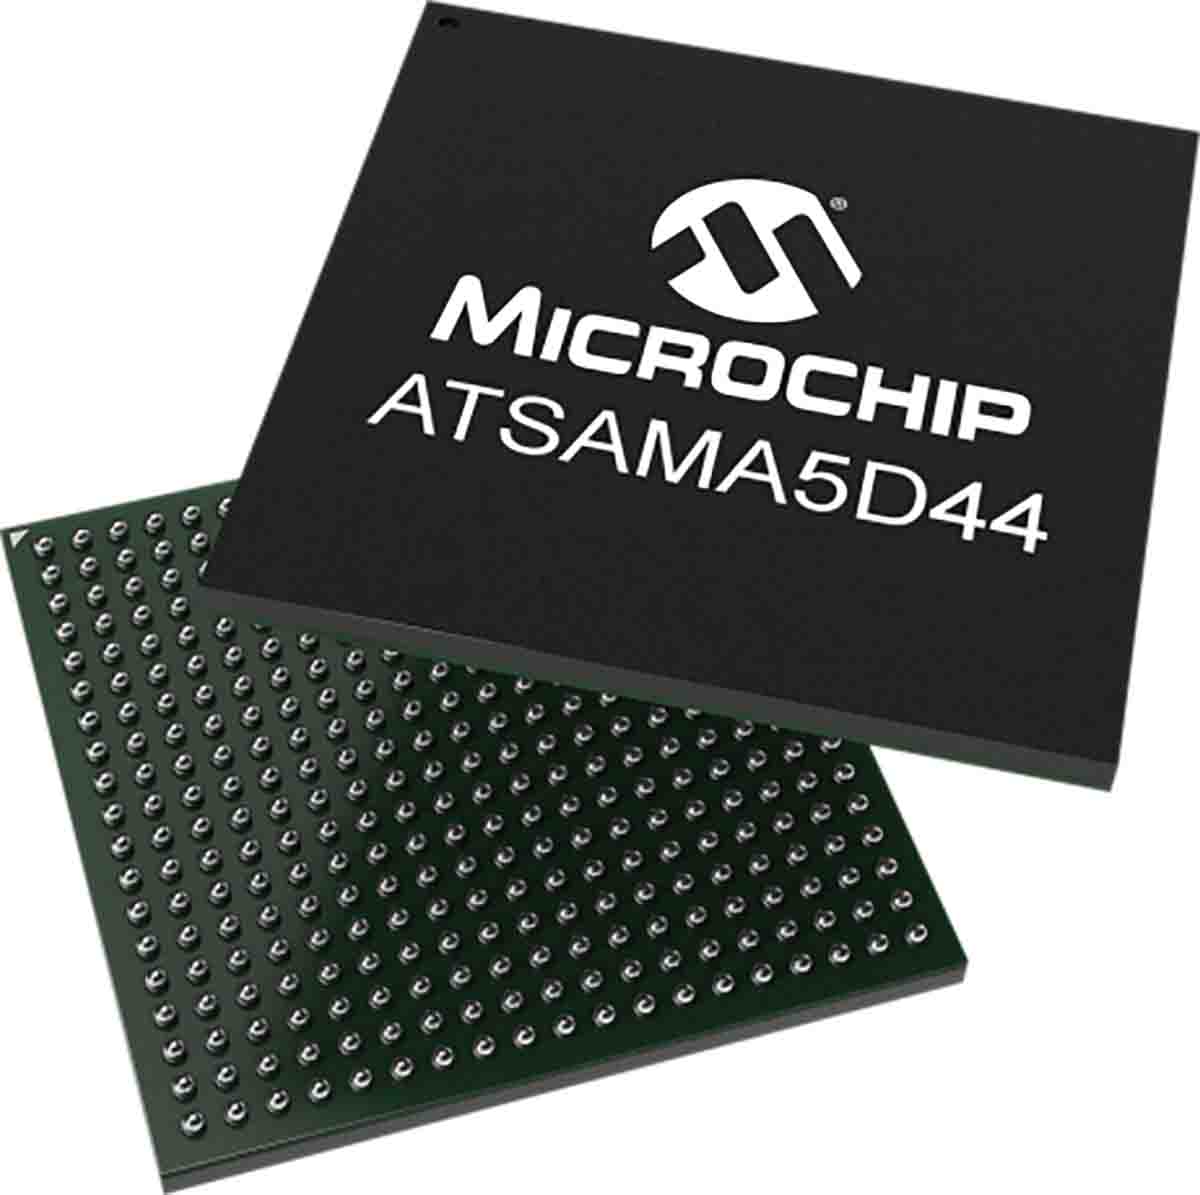 Microchip ATSAMA5D44A-CU, ARM Cortex A5 Microprocessor SAMA5D4 32bit ARM 600MHz 361-Pin TFBGA